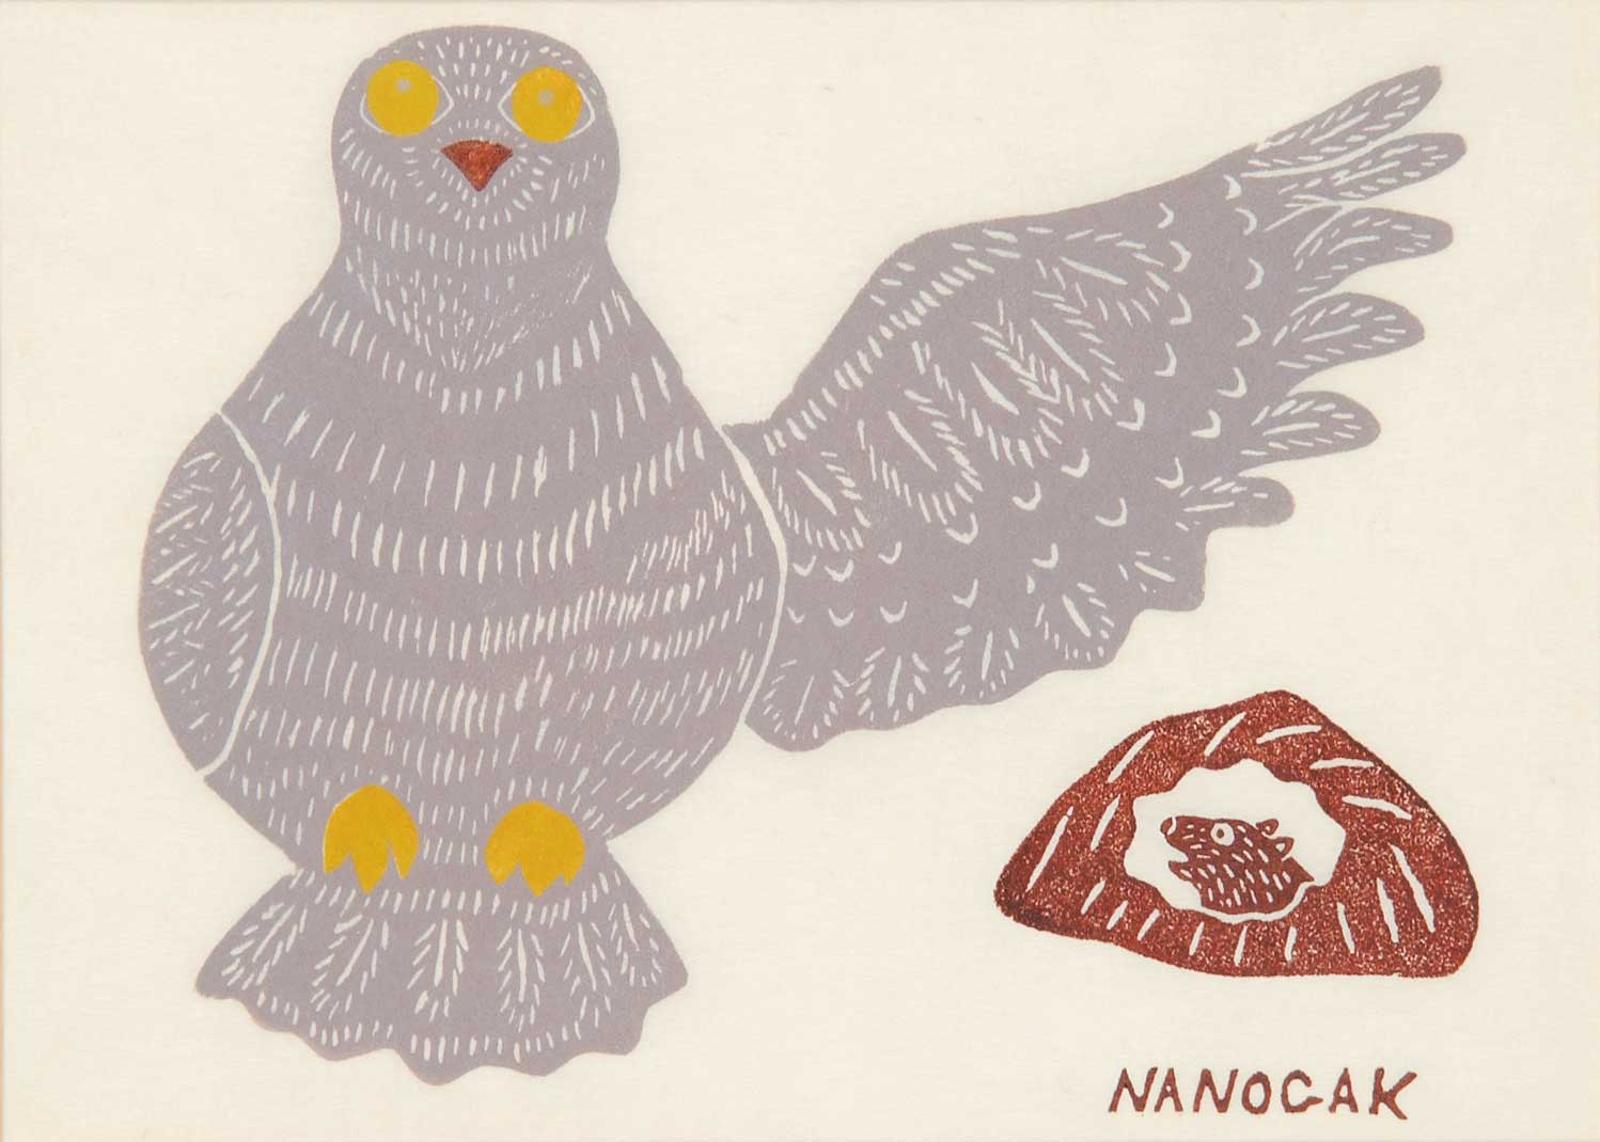 Nanogak - Untitled - Owl